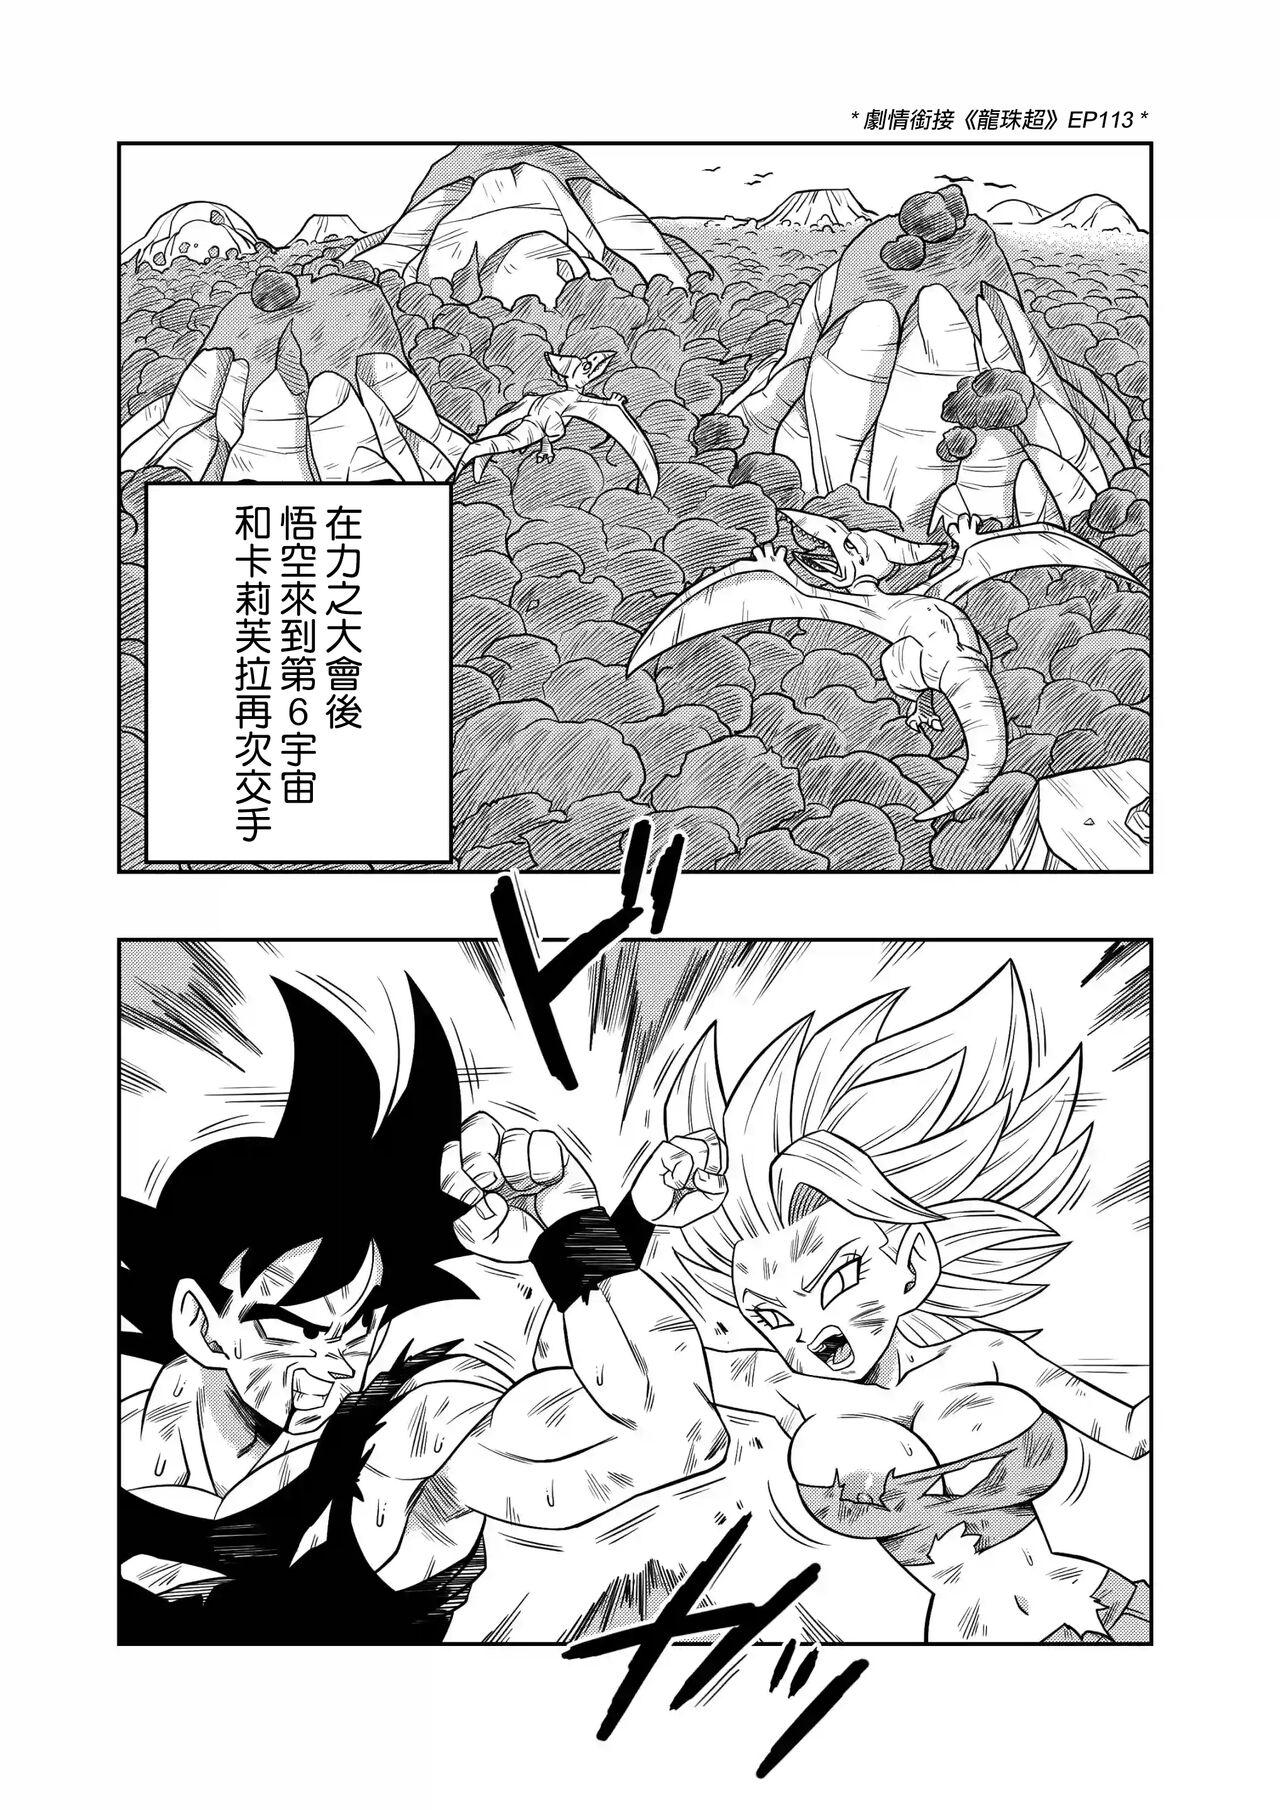 Amateur Fight in the 6th Universe!!! - Dragon ball super Closeups - Page 3